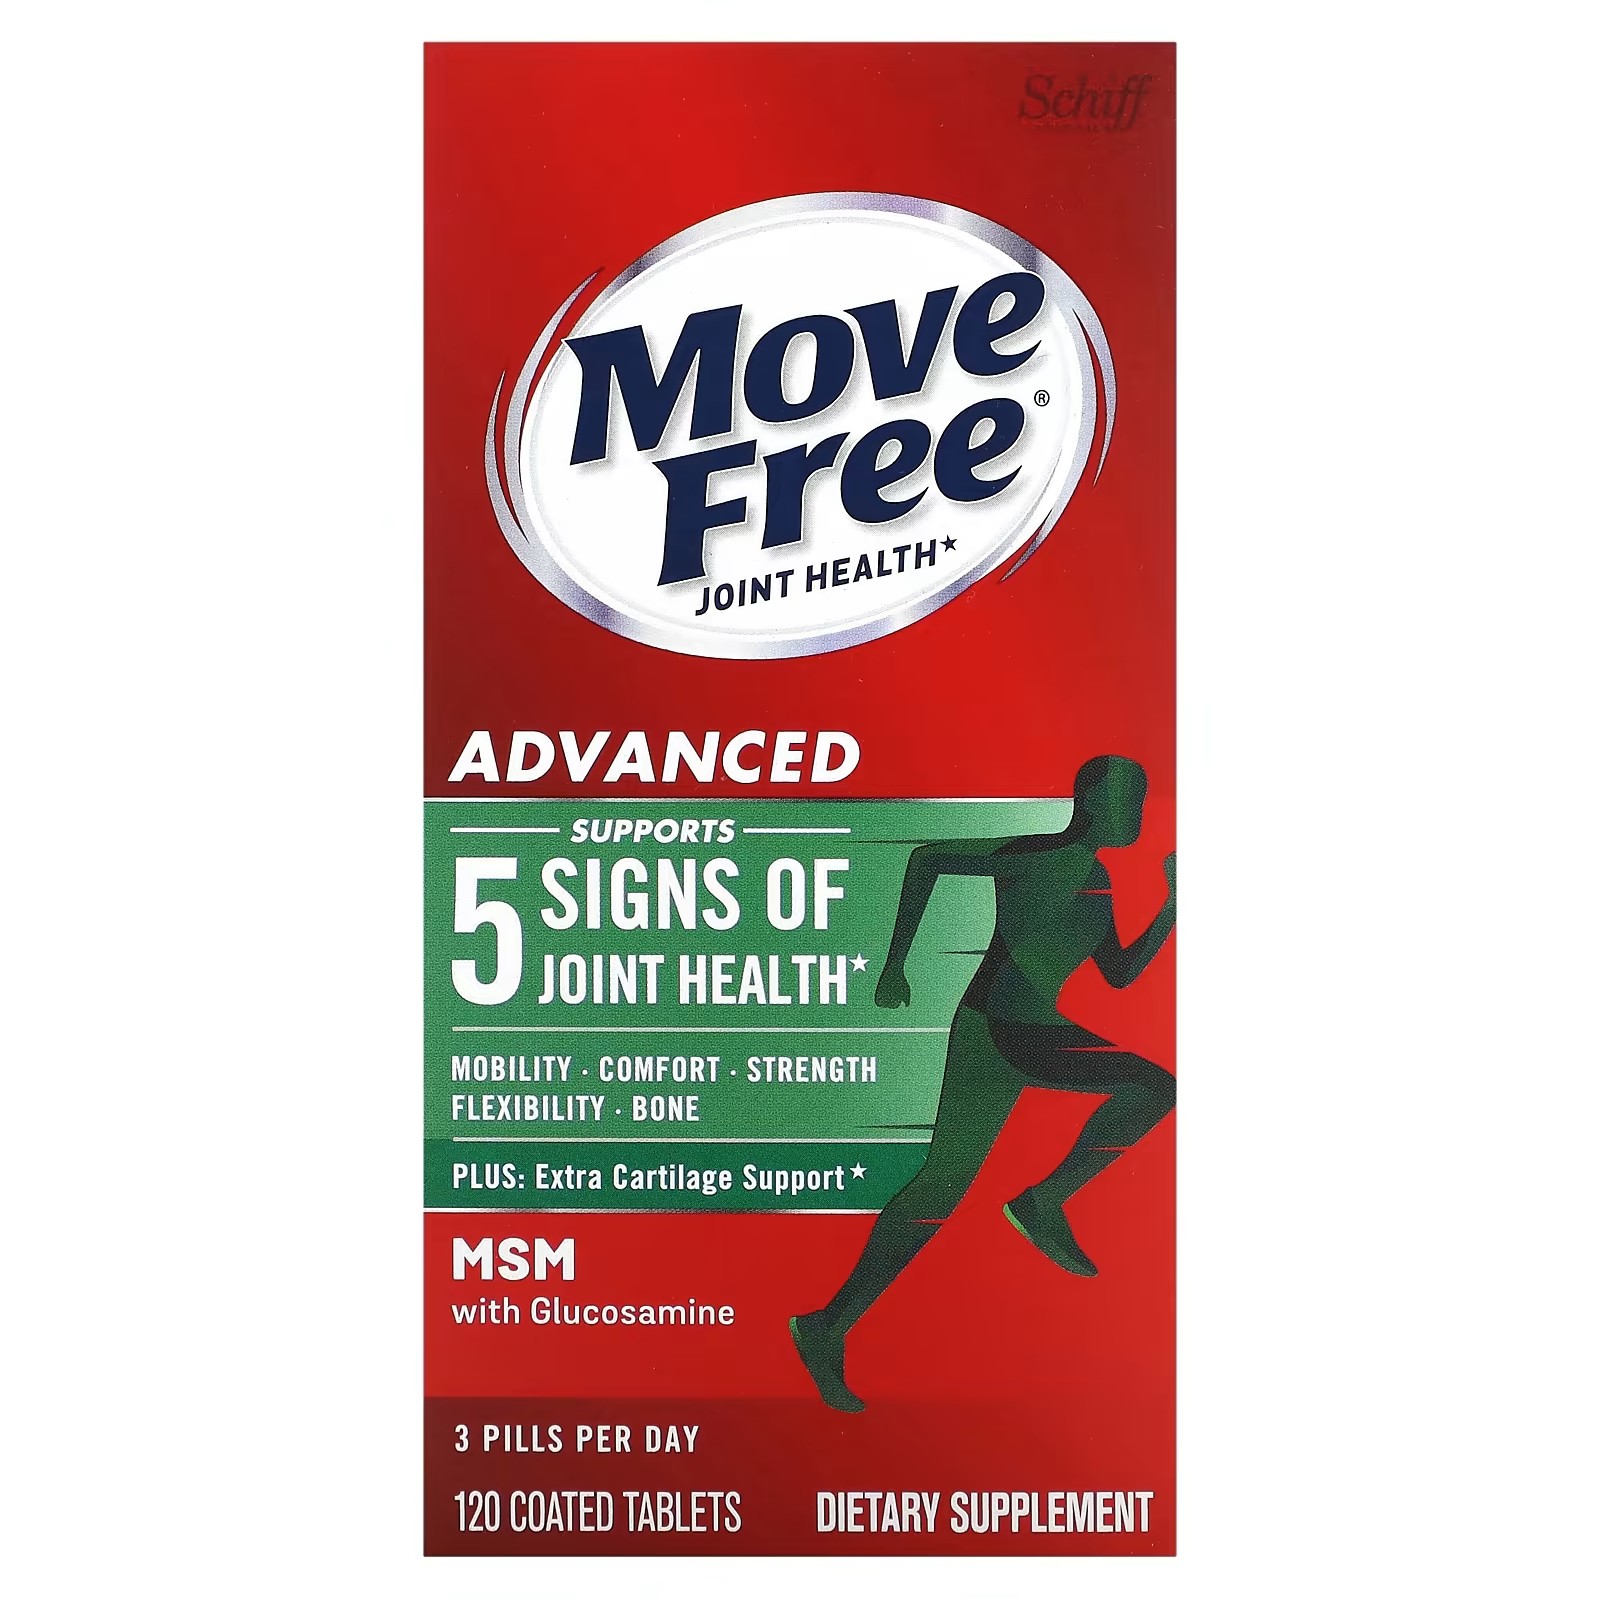 Schiff Move Free Joint Health Advanced Plus МСМ с глюкозамином 120 таблеток, покрытых оболочкой schiff move free advanced добавка для здоровья суставов с глюкозамином хондроитином и мсм 120 таблеток покрытых оболочкой